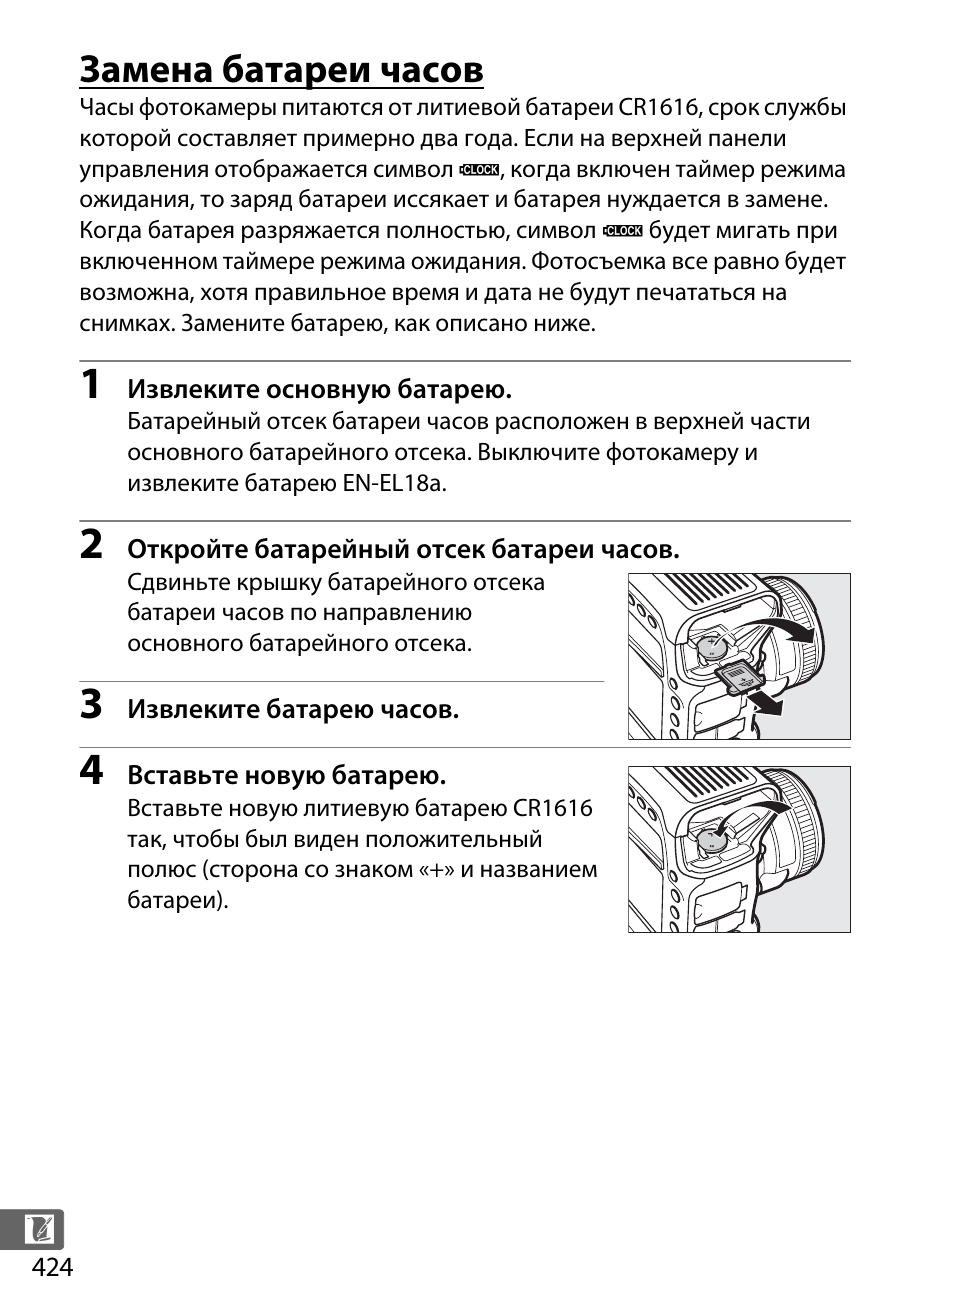 Замена батареи часов | Инструкция по эксплуатации Nikon D4S | Страница 446 / 500